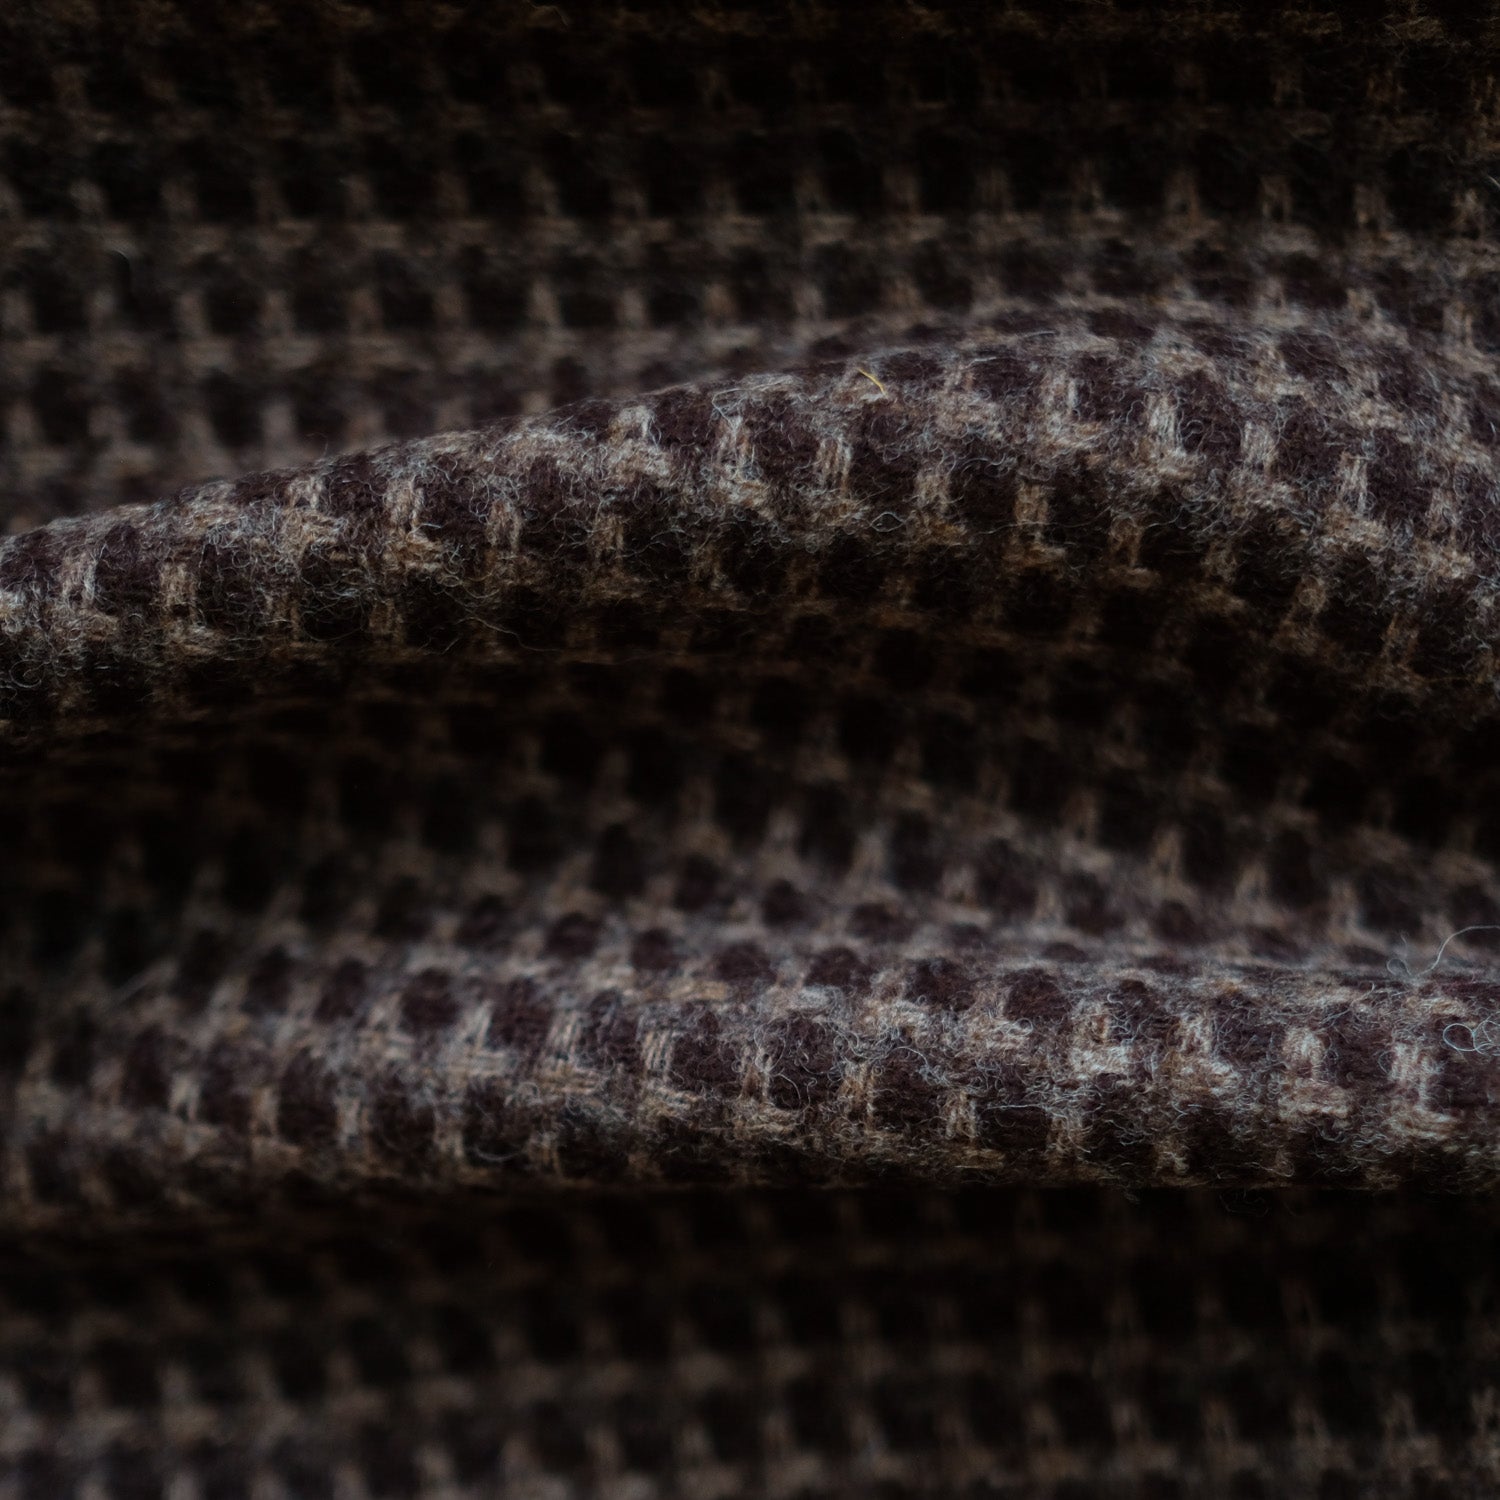 Wool Fabrics